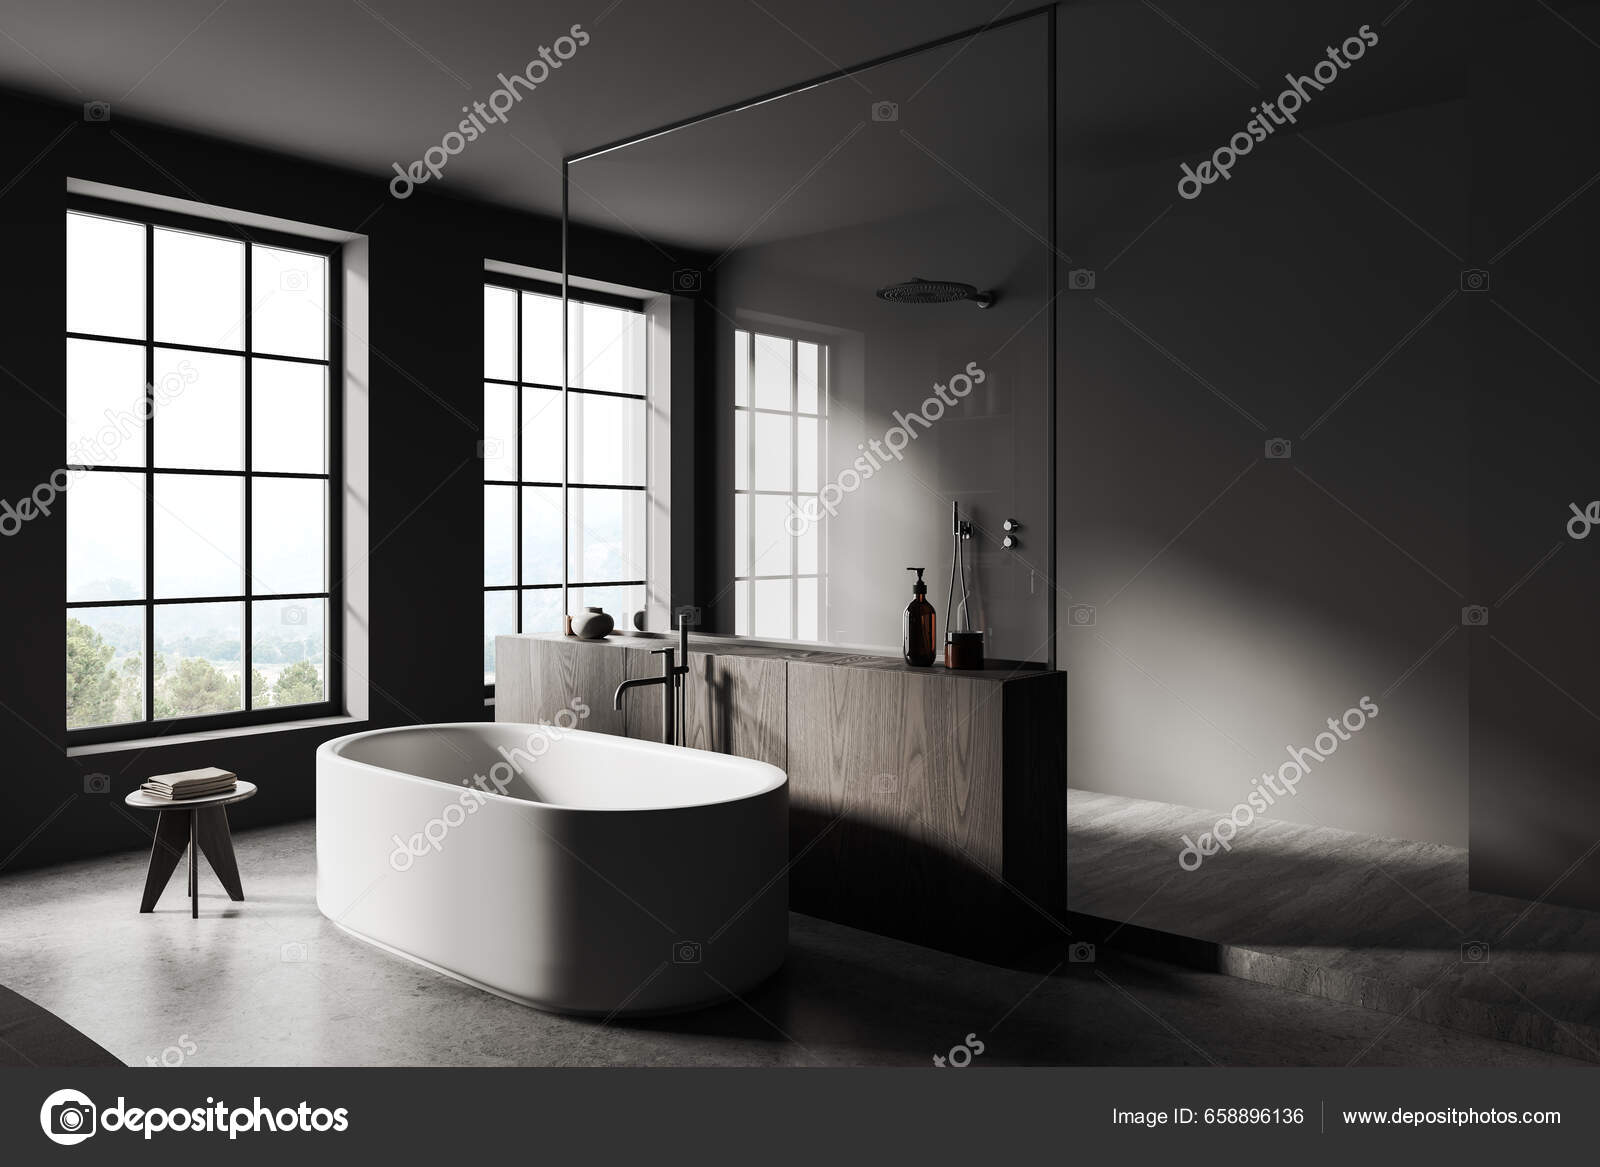 Mampara ducha Negra  Bathroom tile inspiration, Modern bathroom tile,  Bathroom interior